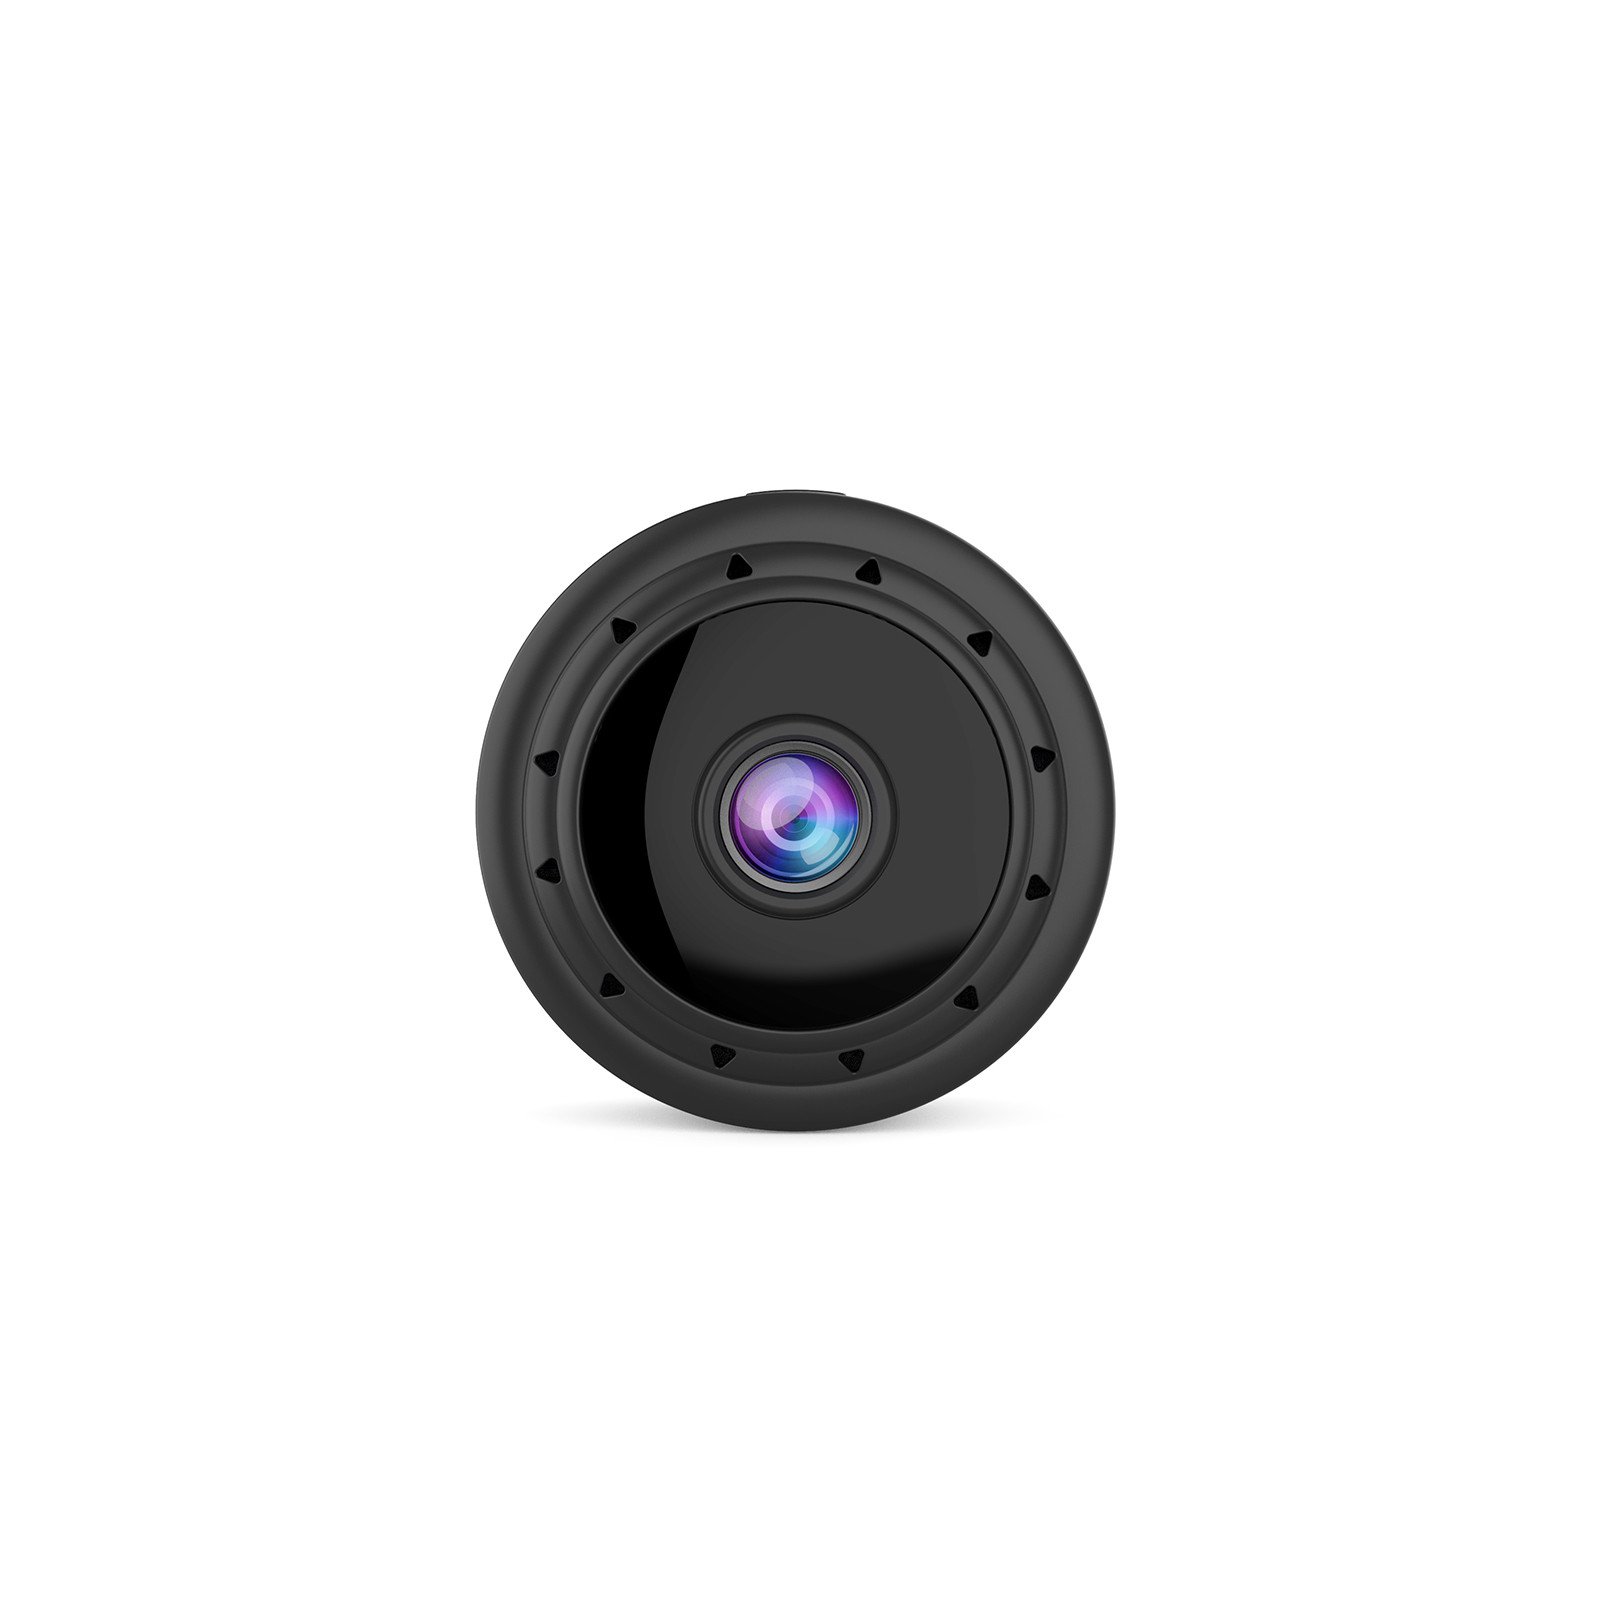 Mini Camera HD 1080p Wifi Security Video Remote Webcam Night Vision Magnet Bracket 150 Degree